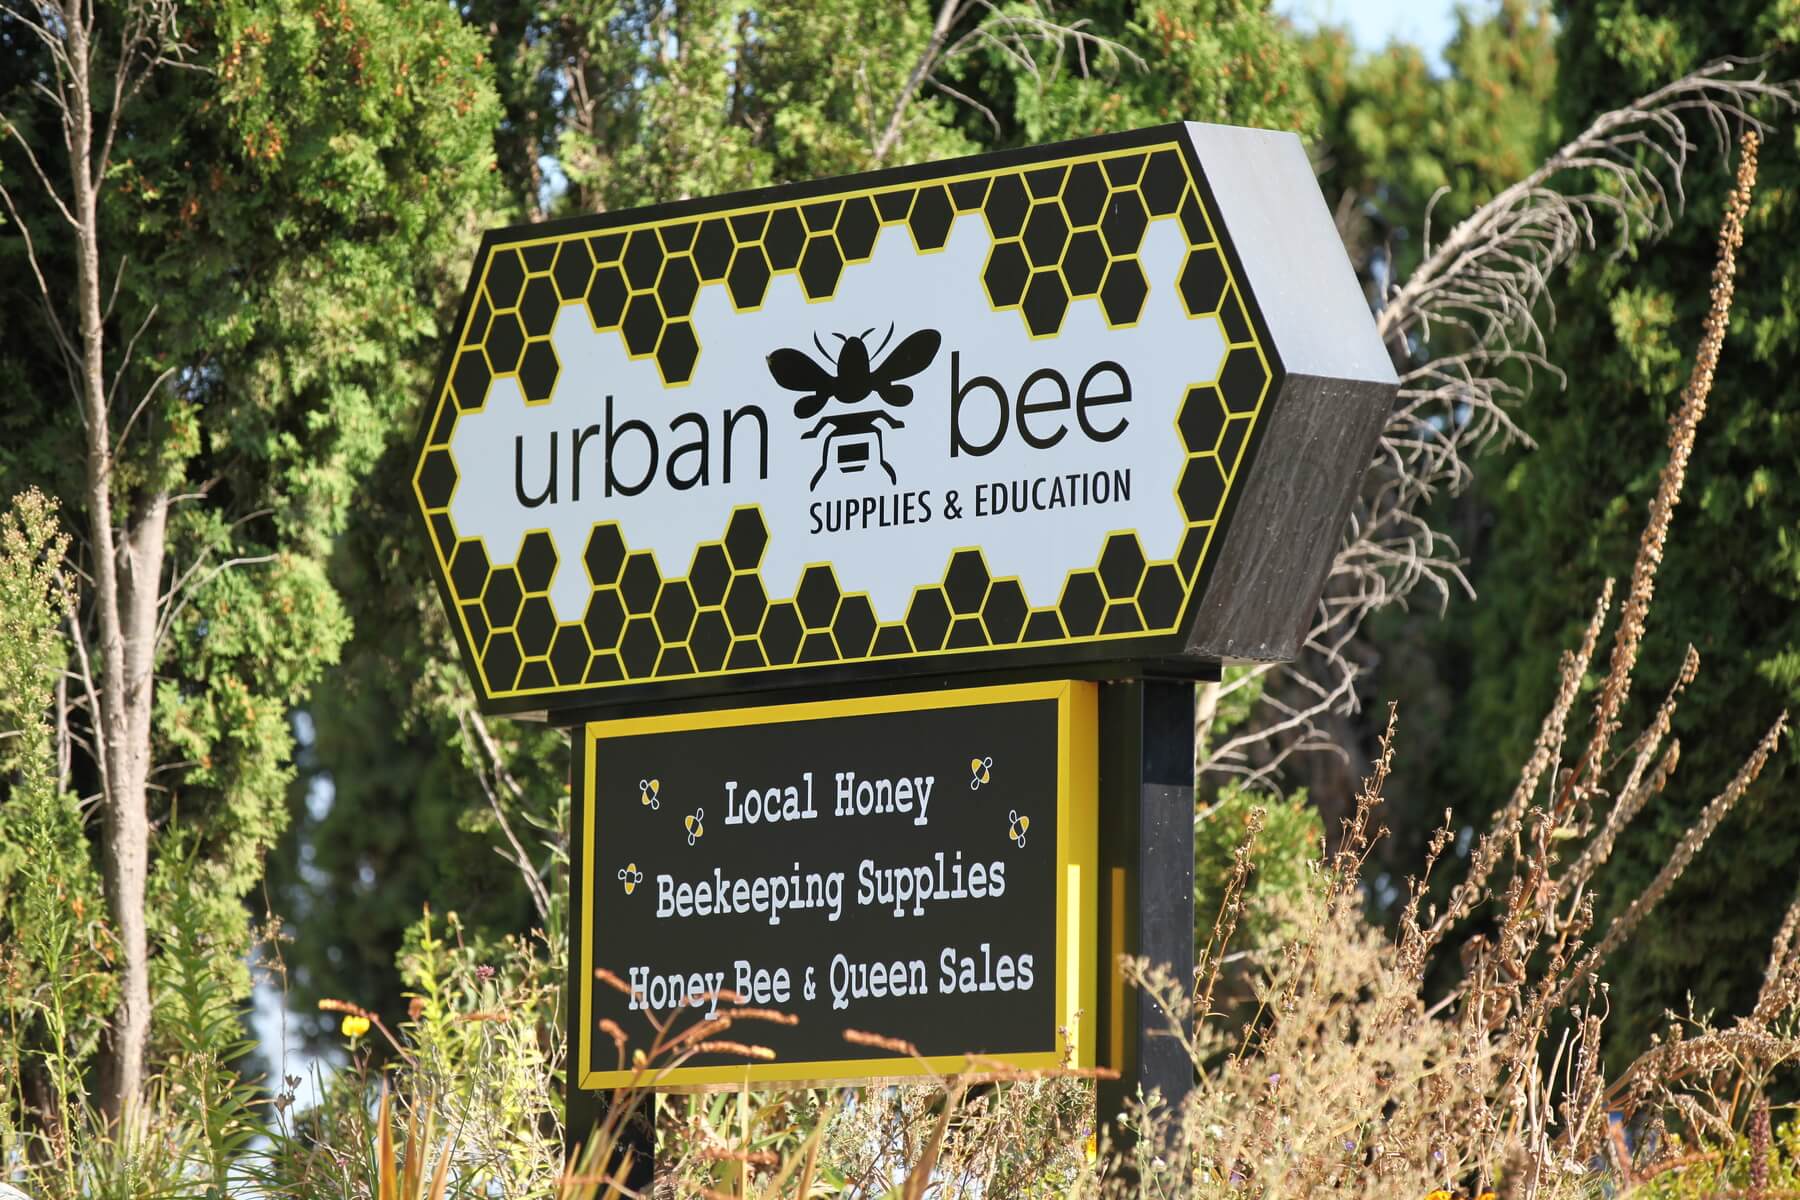 Urban Bee Supplies & Education